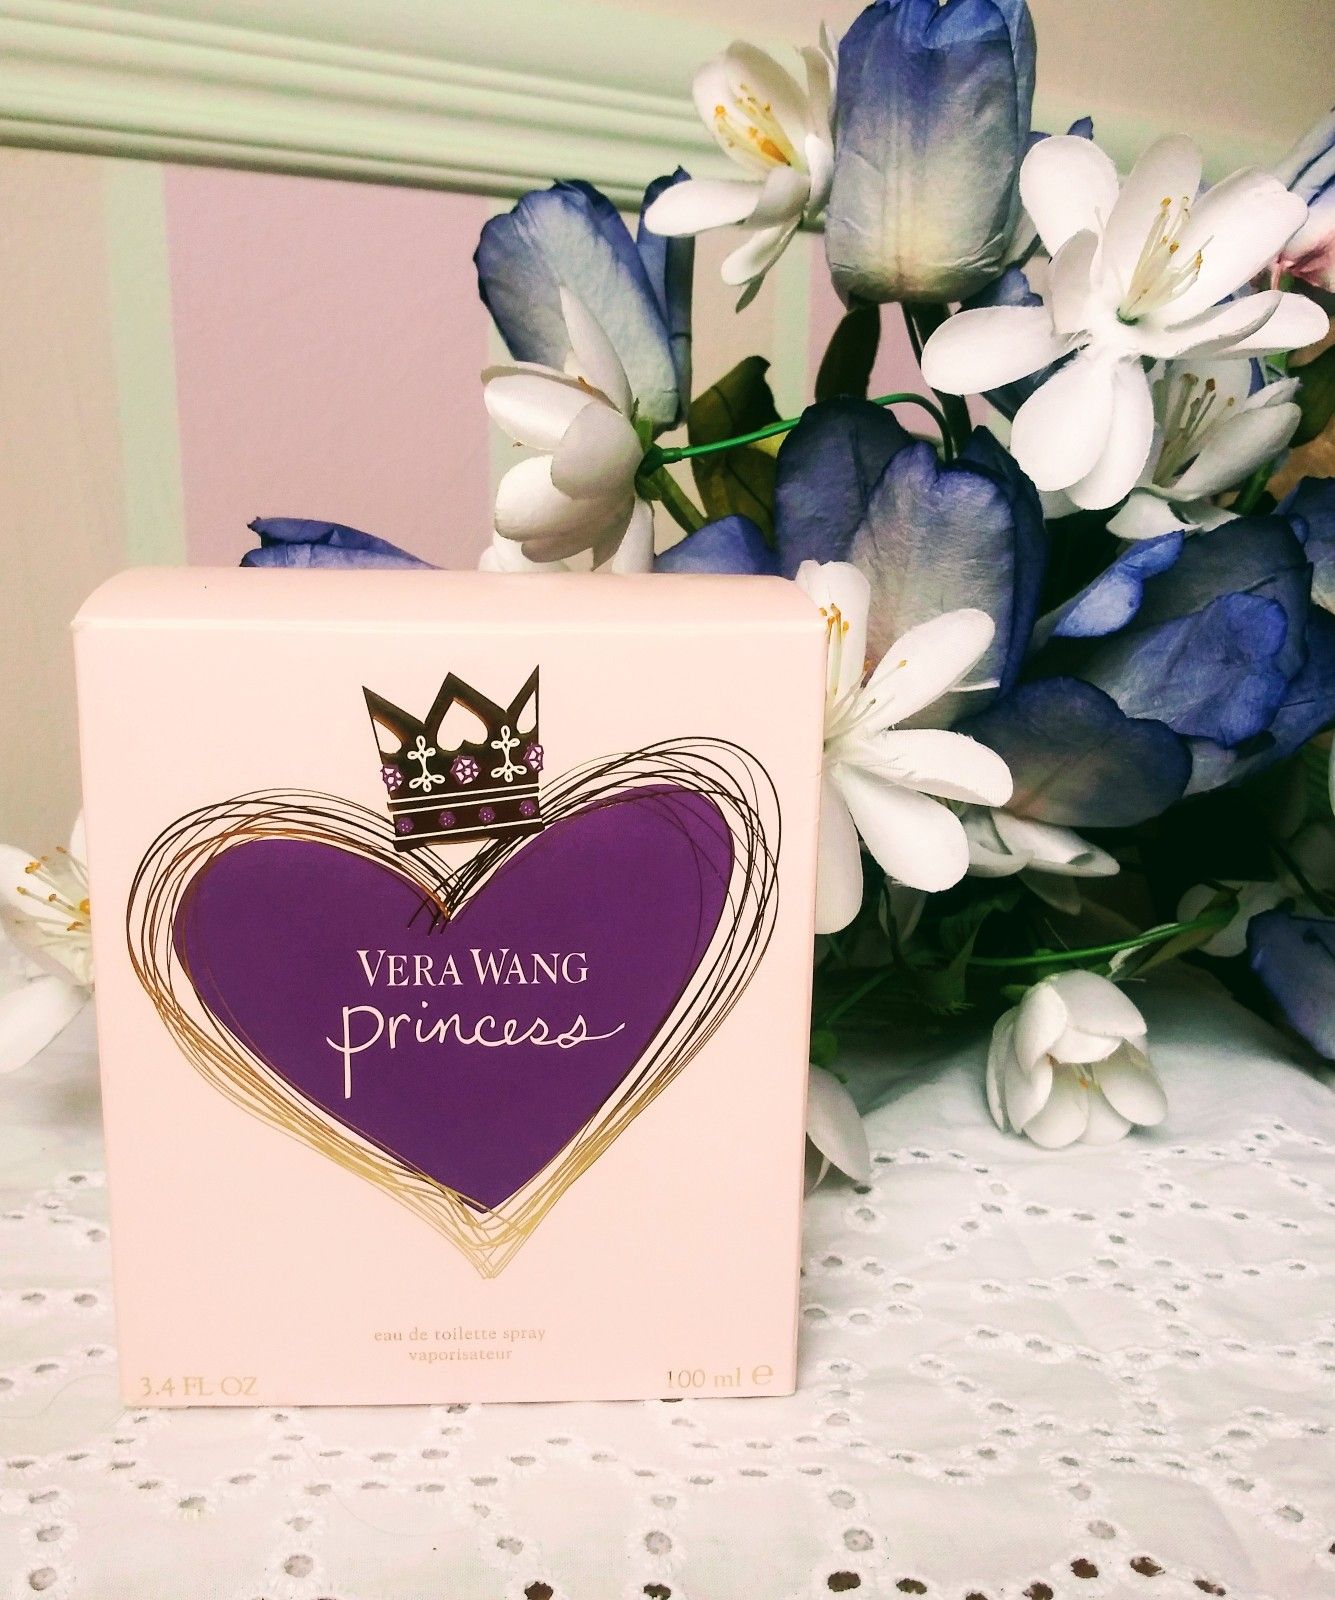 Vera Wang Princess Perfume 3.4 oz